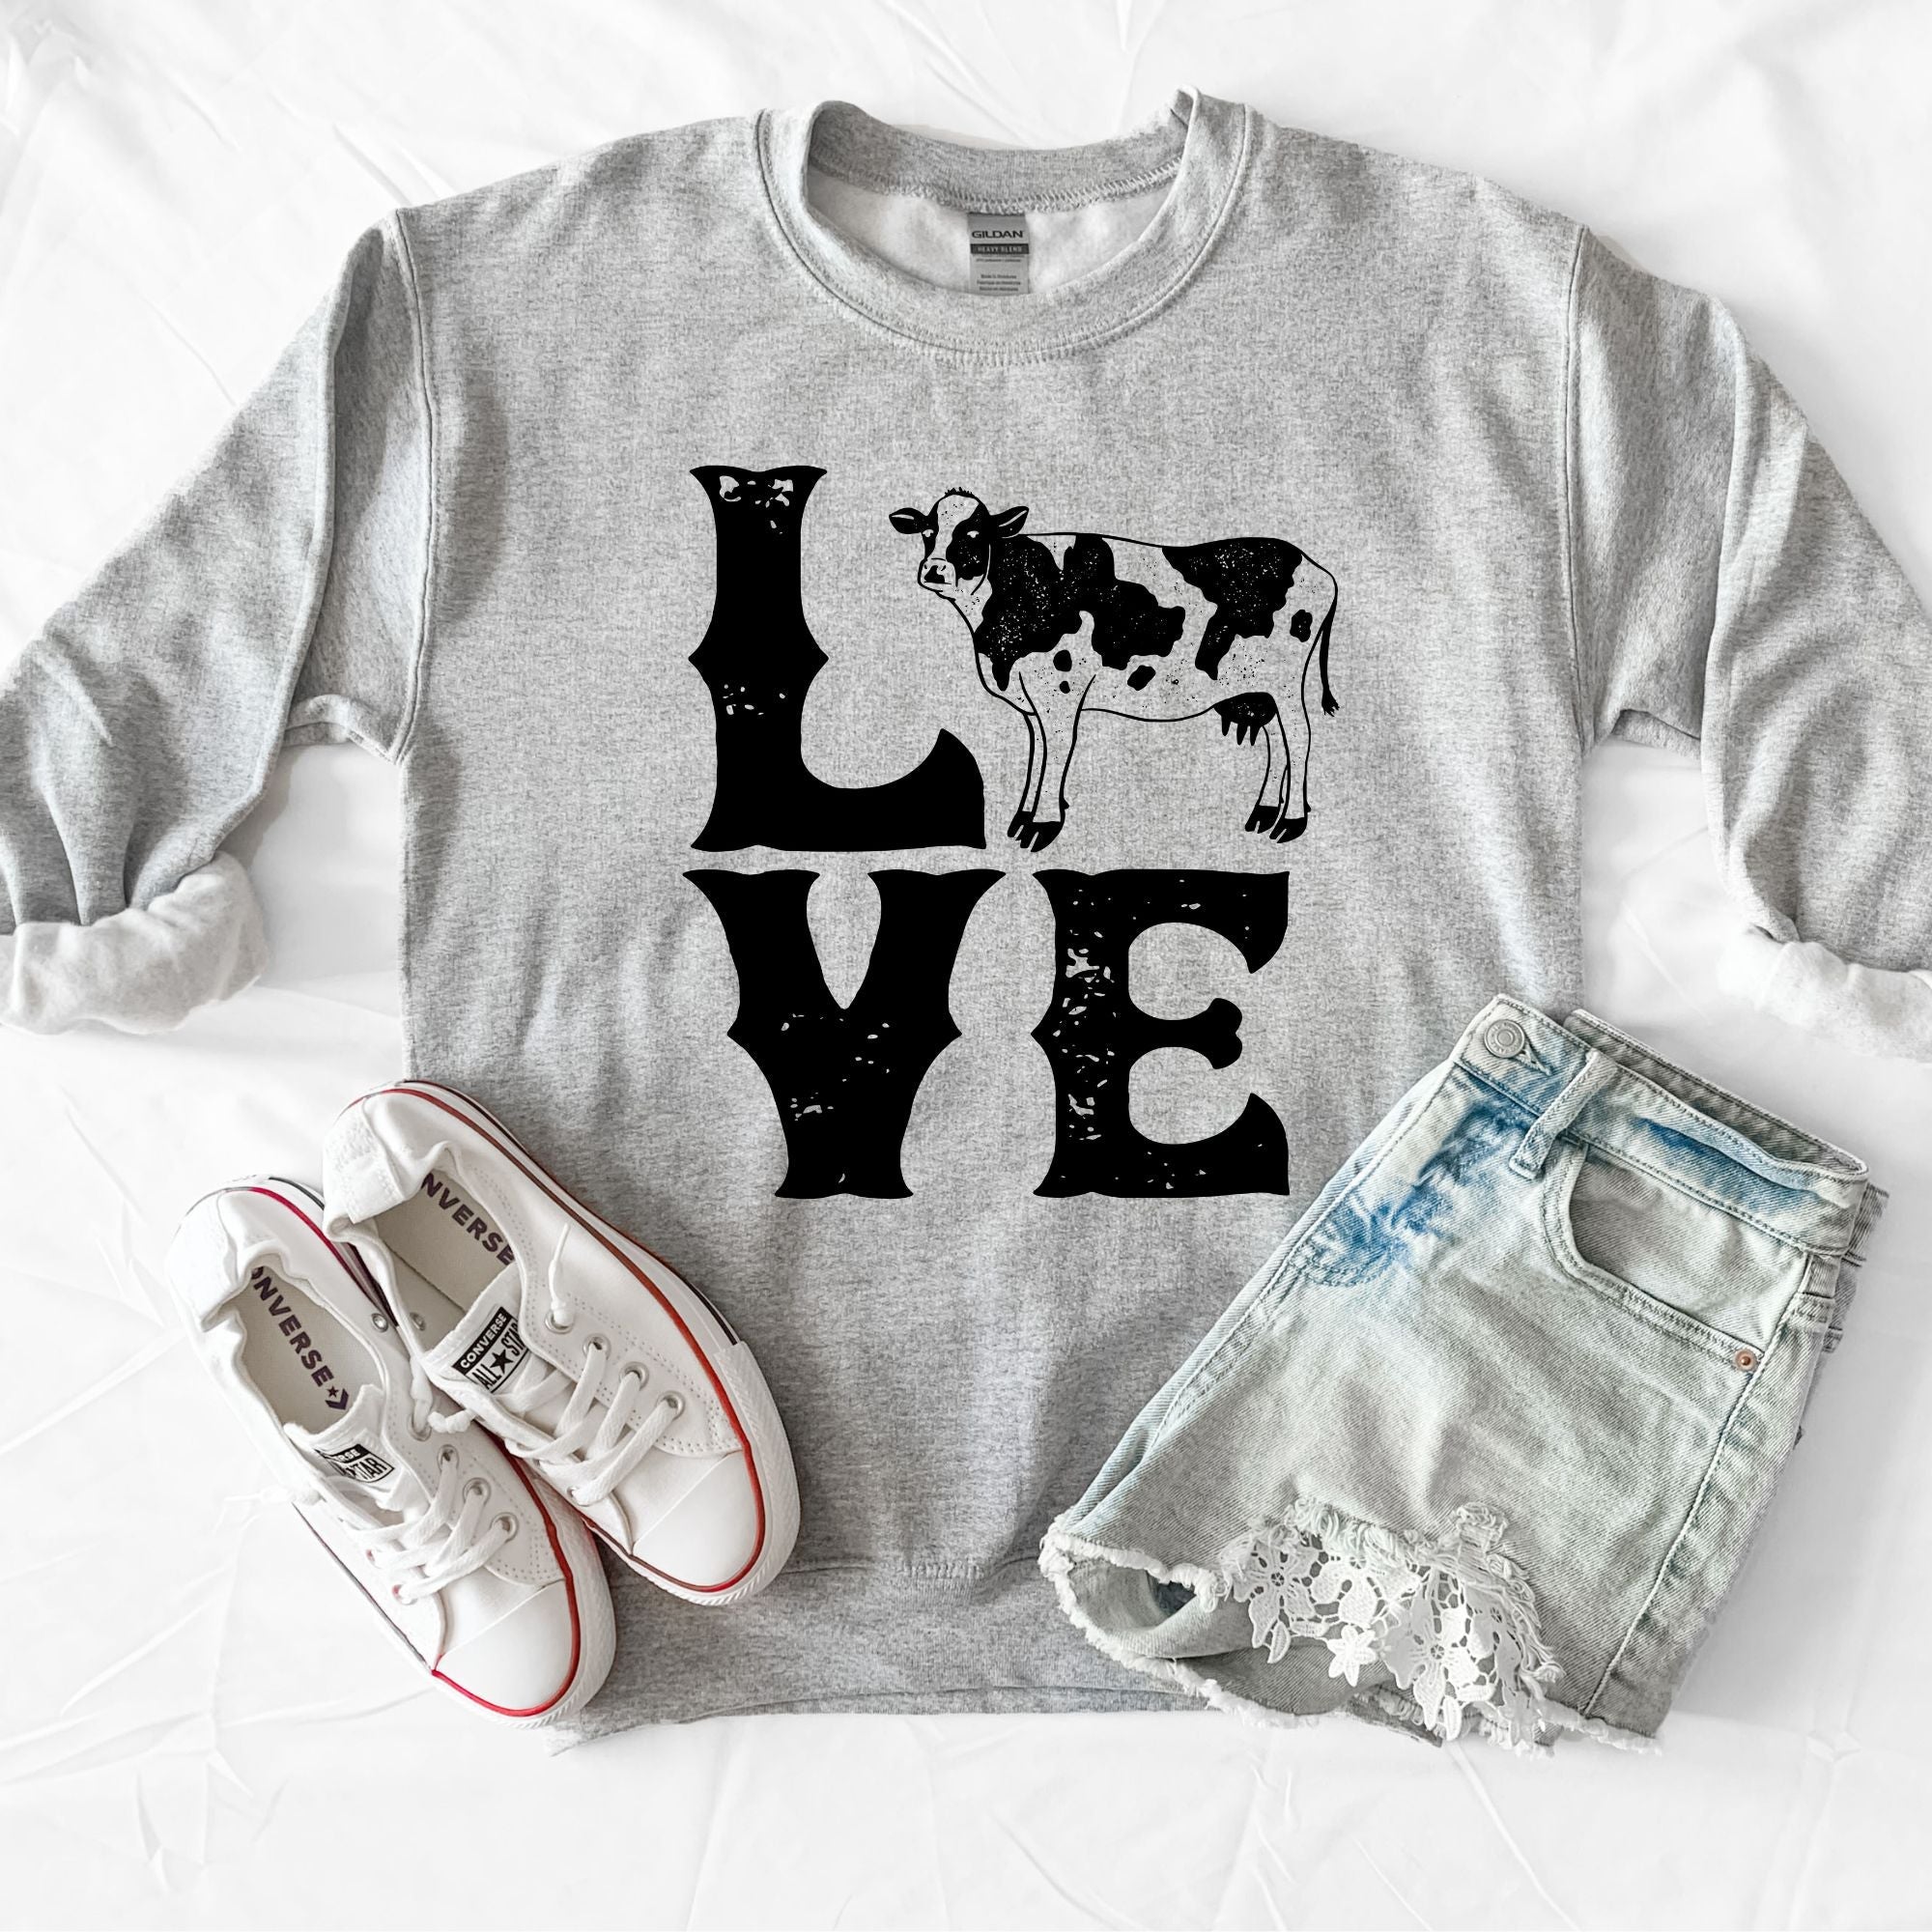 Cow Lover Sweatshirt - Hoodie or Crewneck for Cow Lover *UNISEX FIT*-Sweatshirts-208 Tees Wholesale, Idaho